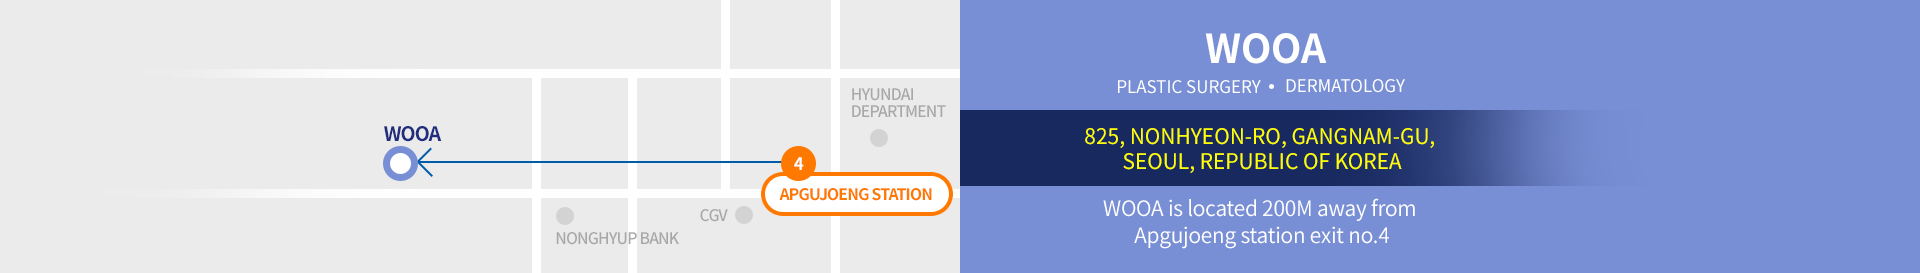 APGUJEONG REGEN PLASTIC SURGERY DERMATOLOGY 825, Nonhyeon-ro, Gangnam-gu, Seoul, Republic of Korea Regen is located 200M away from Apgujoeng station exit no.4